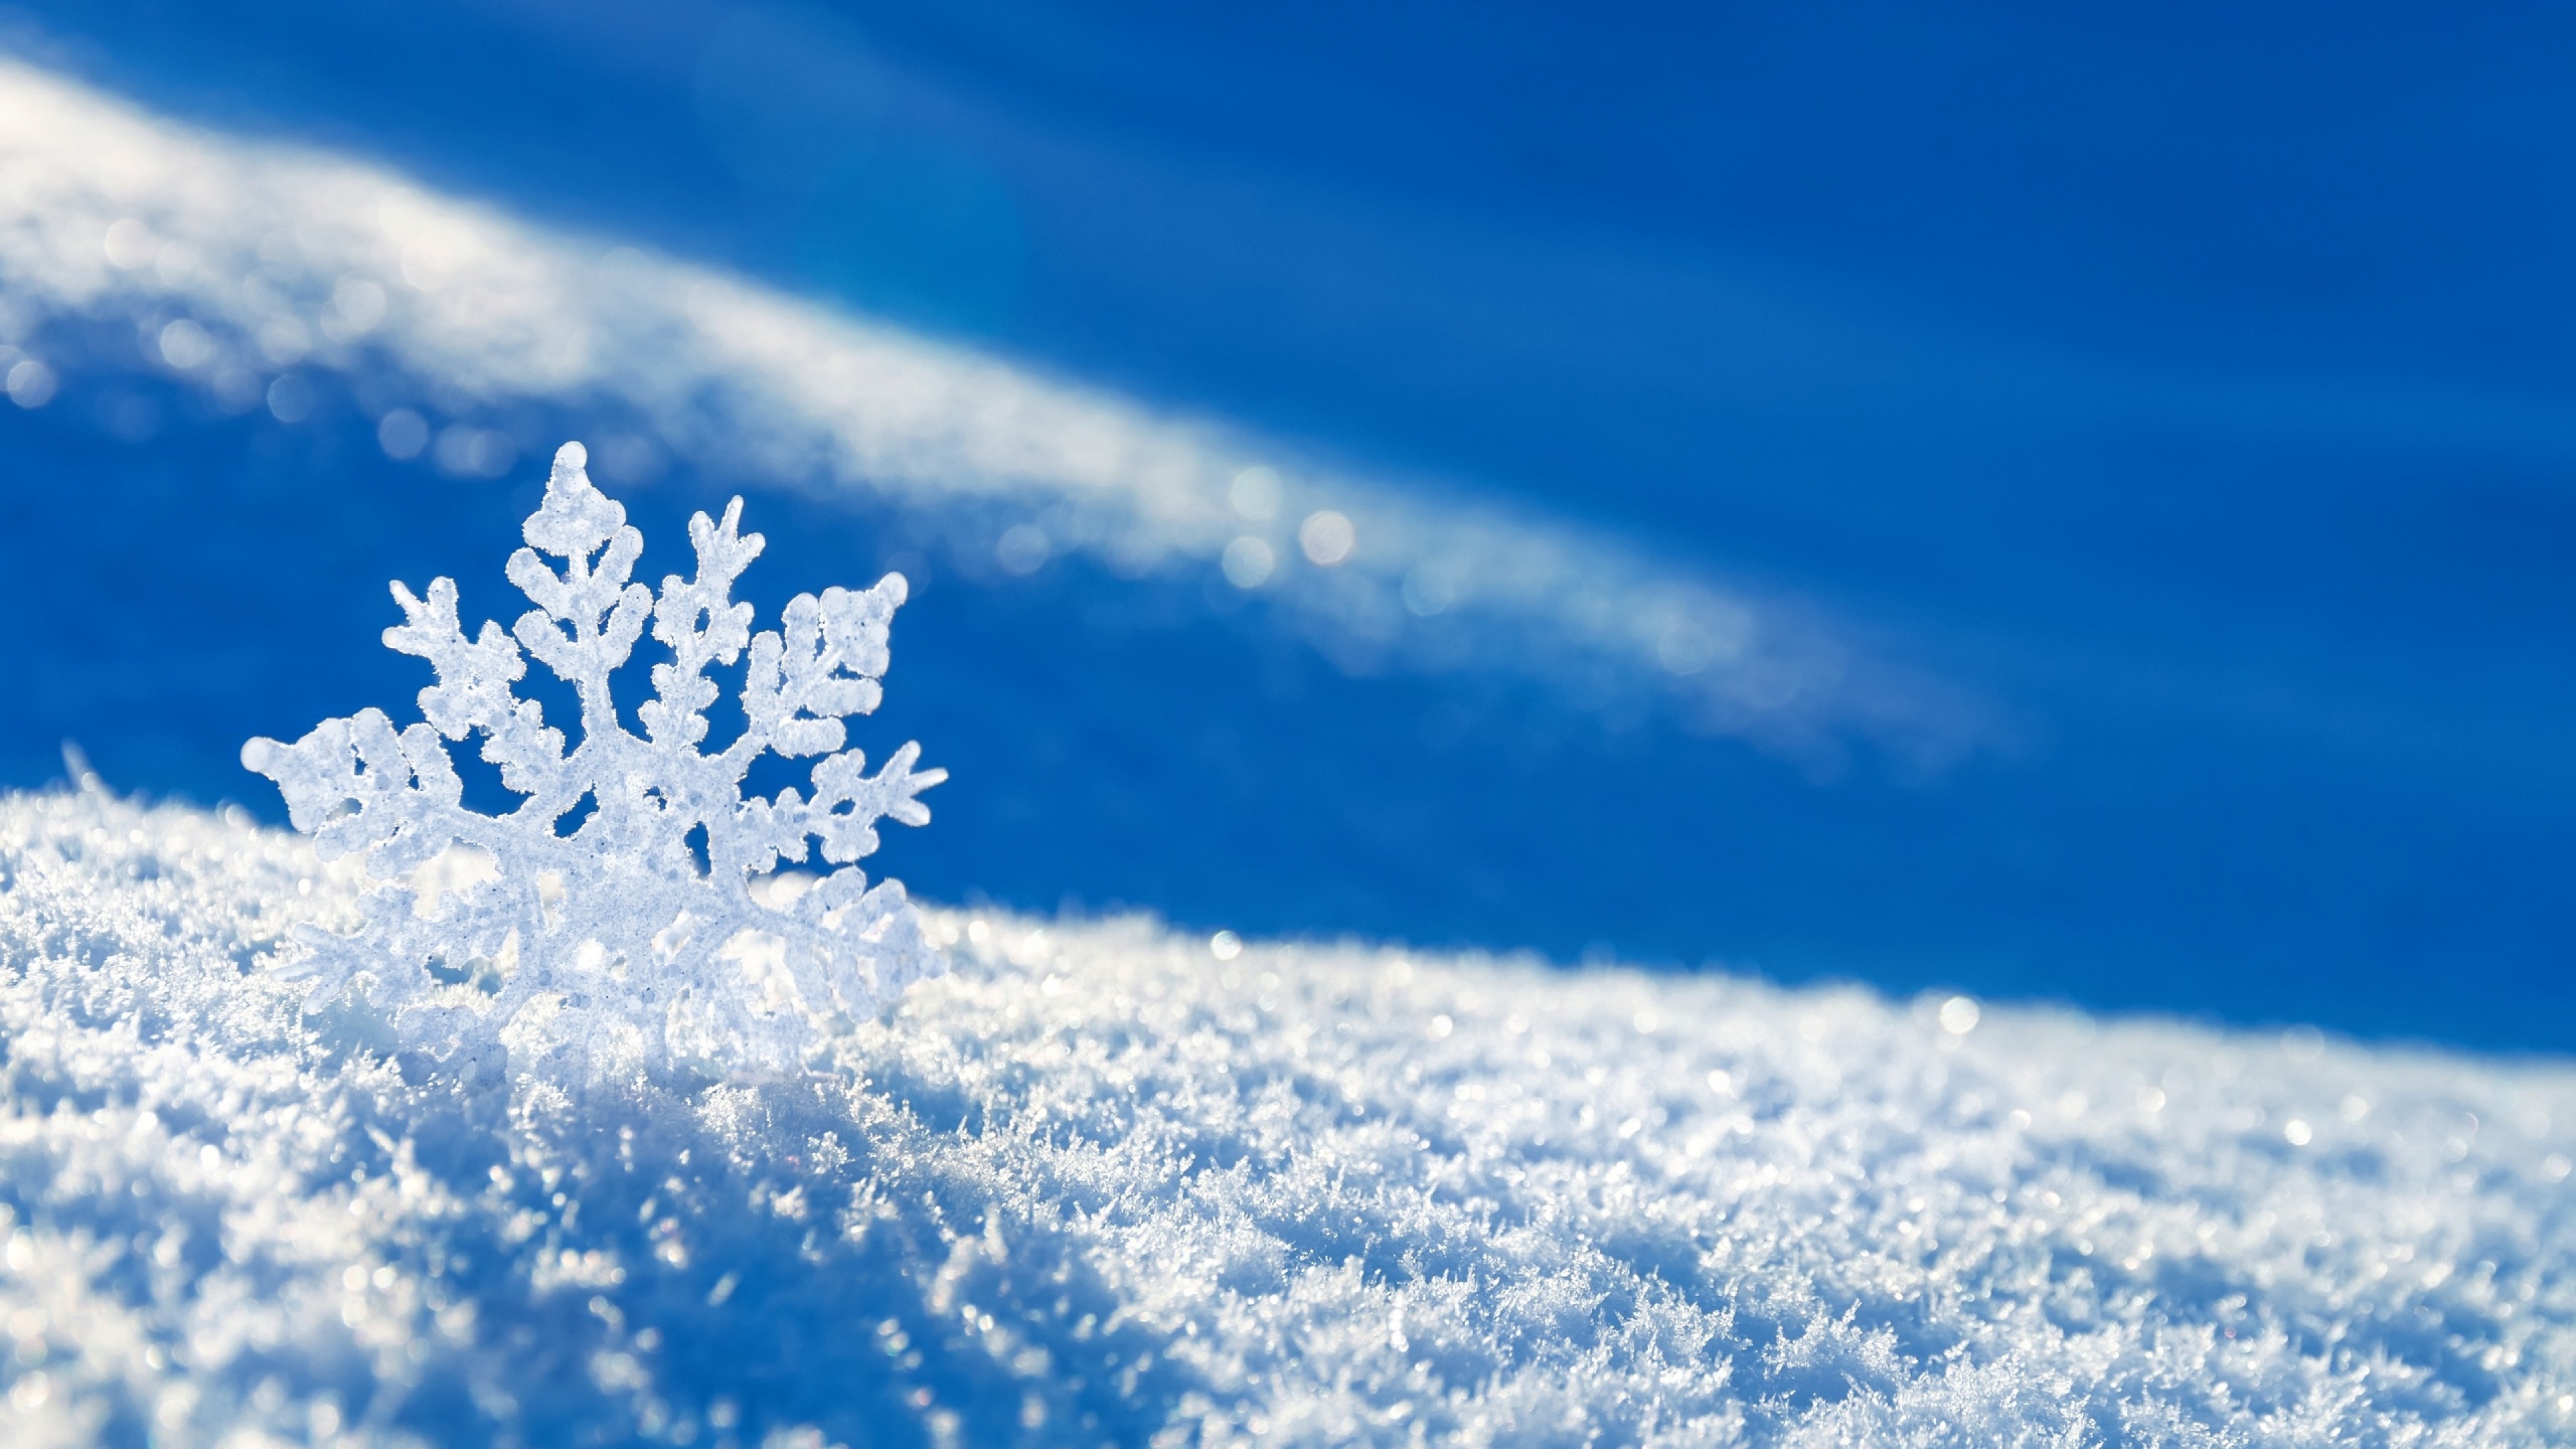 snowflake wallpaper hd,snow,sky,winter,frost,freezing